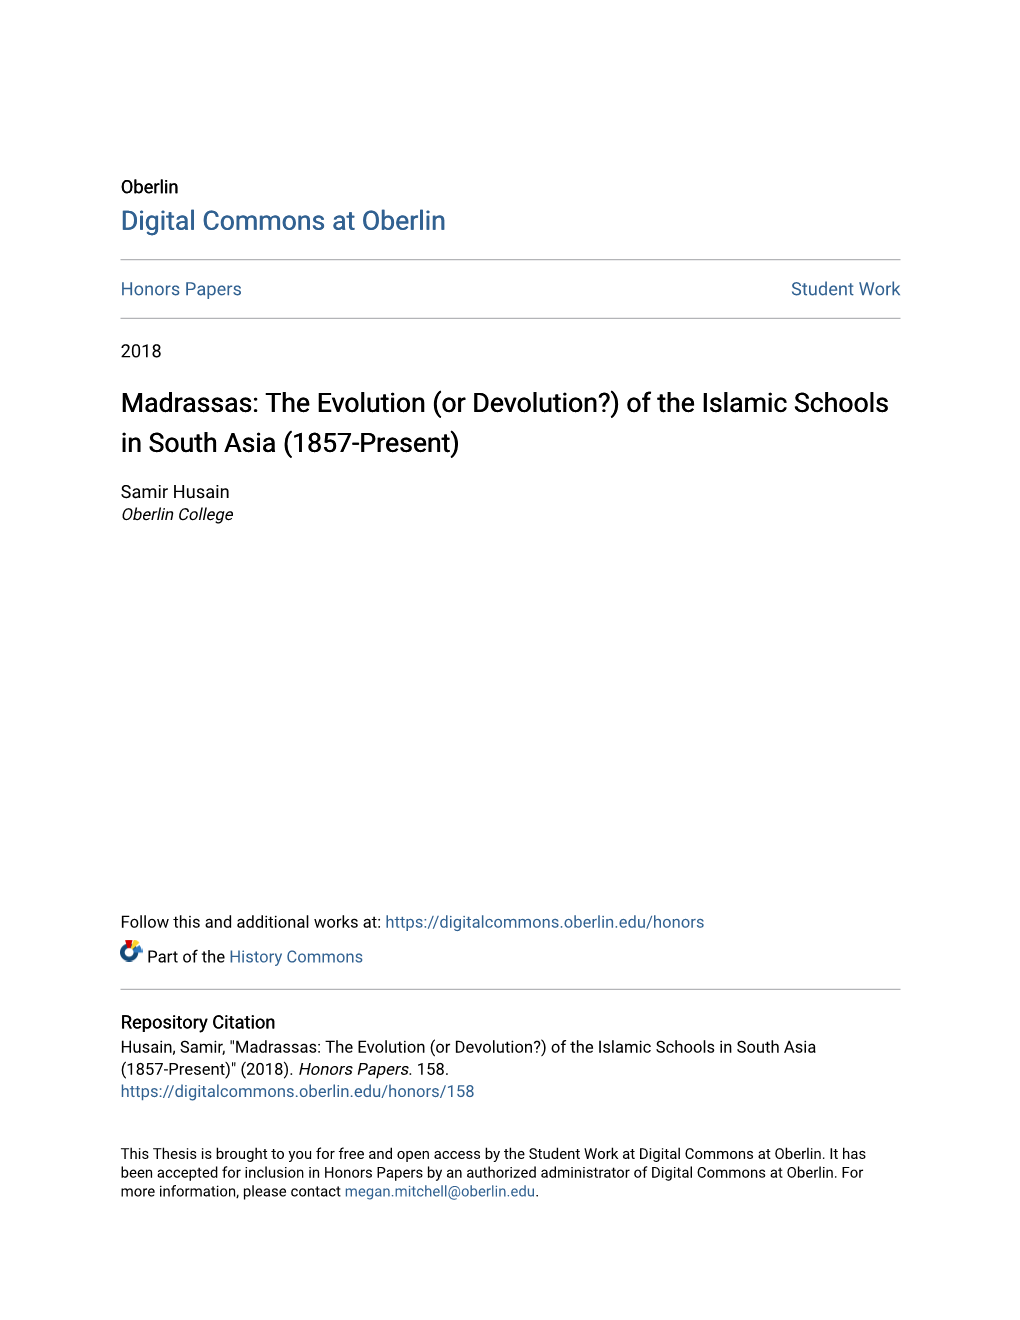 Madrassas: the Evolution (Or Devolution?) of the Islamic Schools in South Asia (1857-Present)